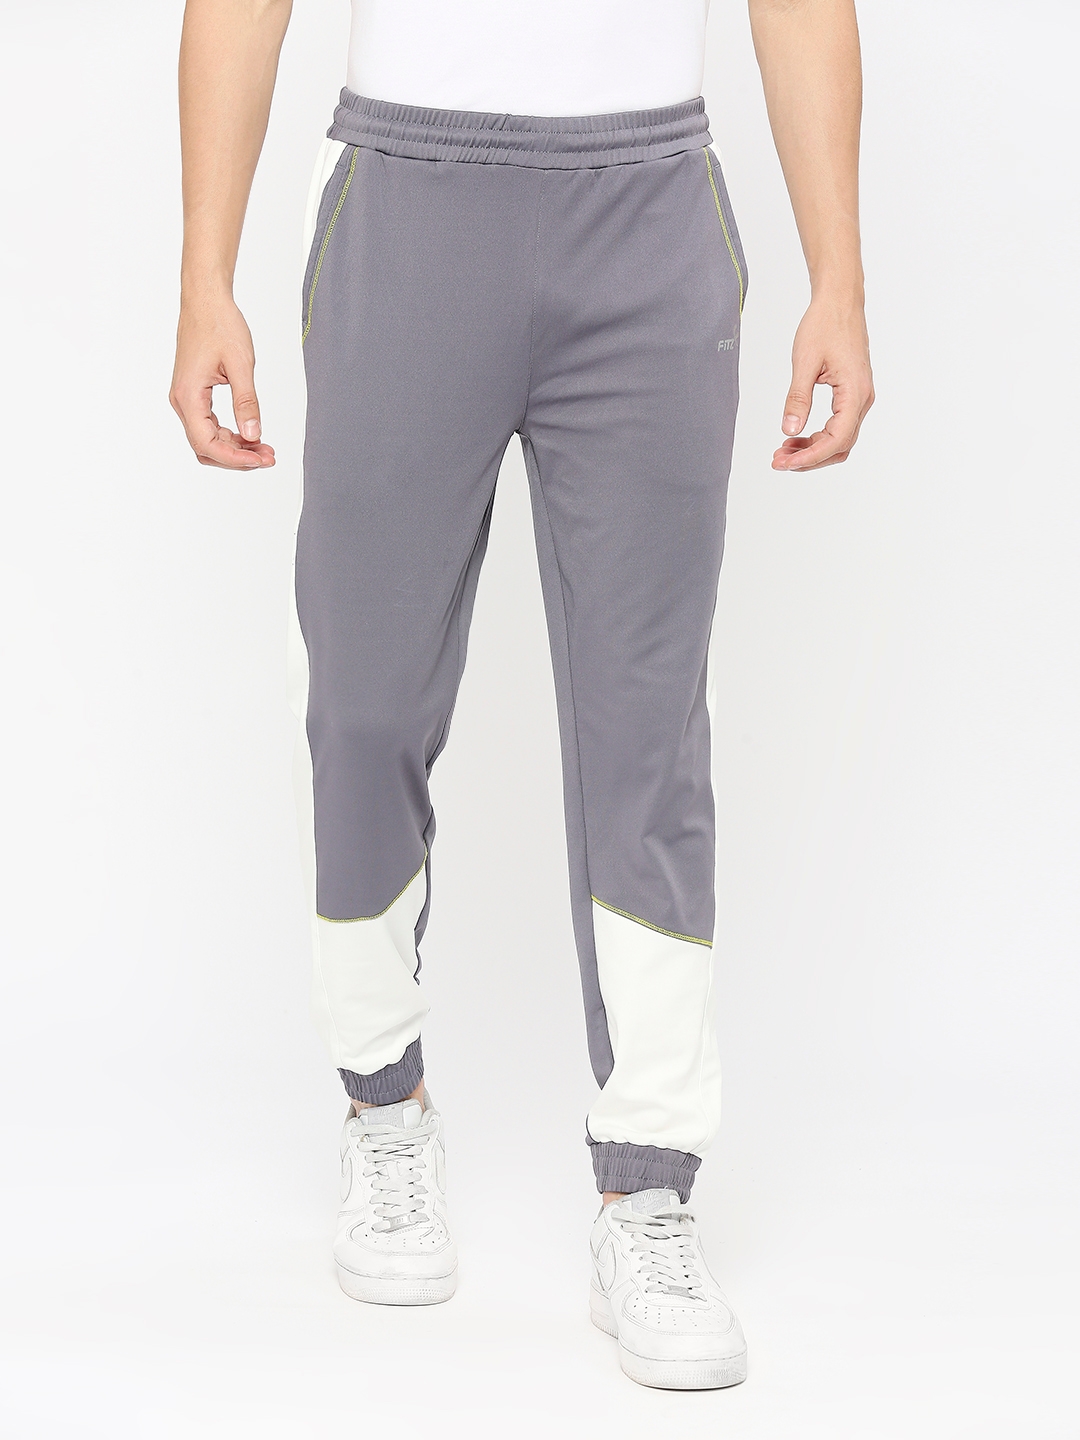 FITZ | Men's Slim Fit Grey Cotton Blend Casual Joogers 0